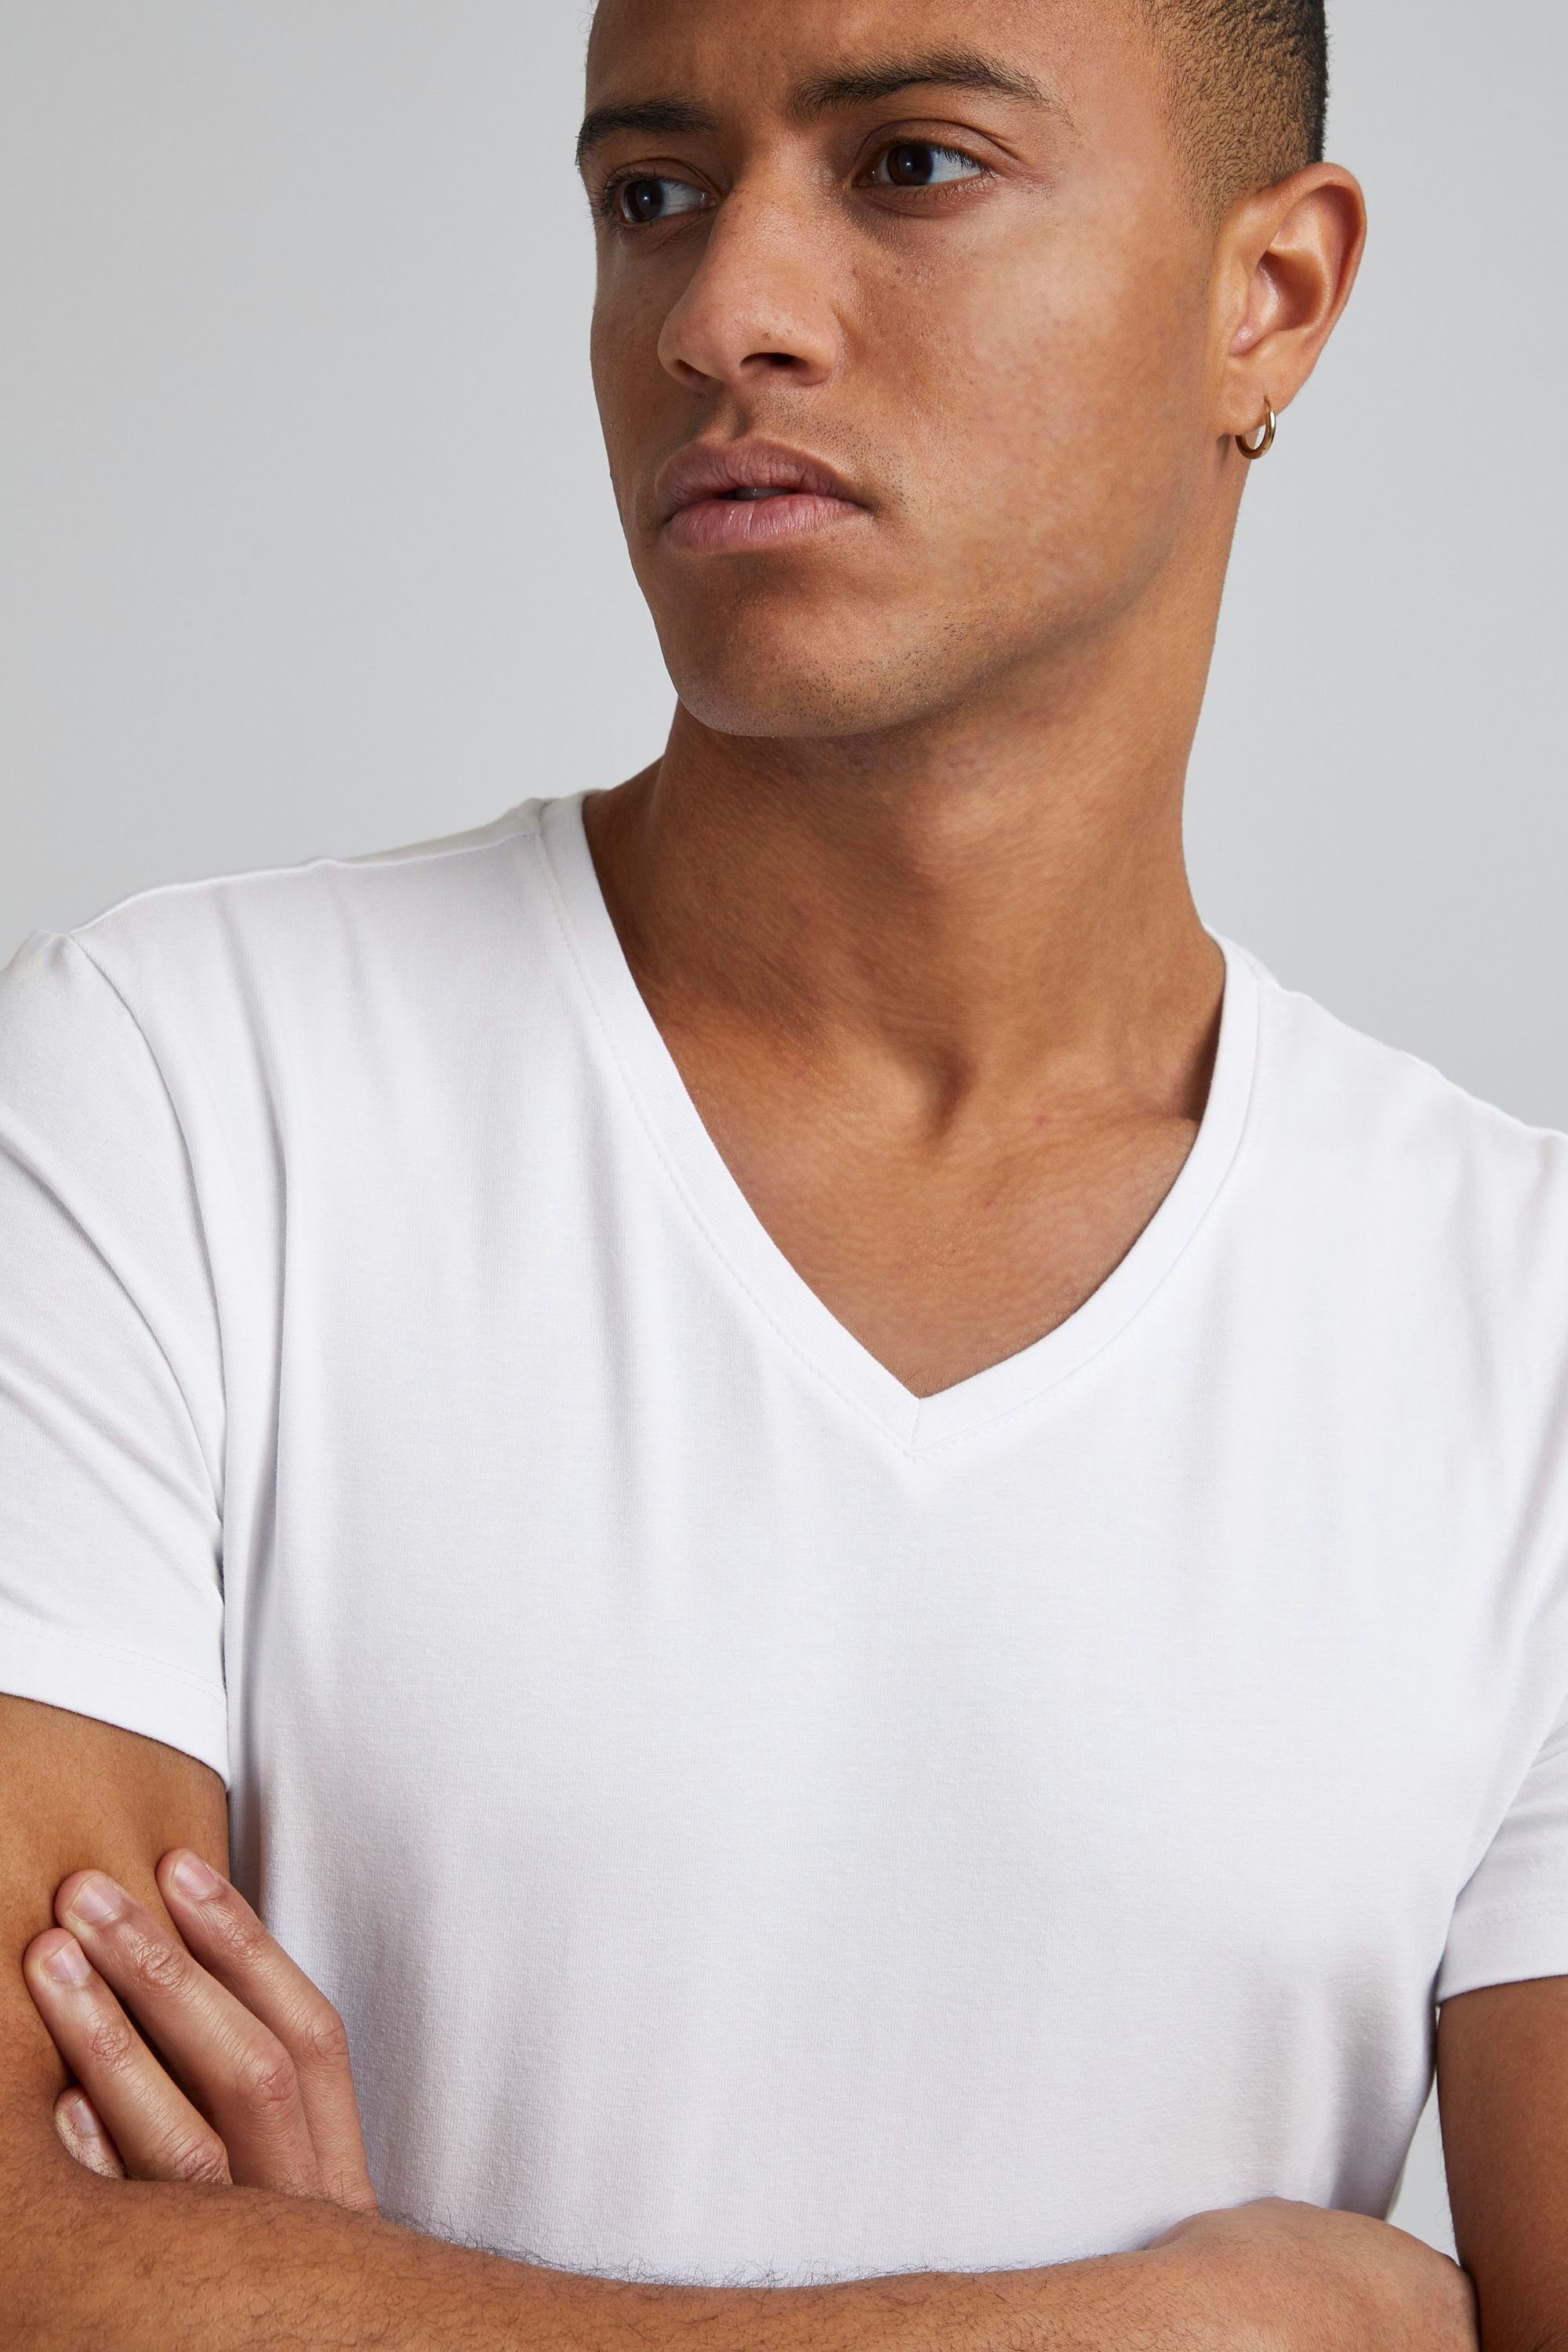 CFLincoln Friday 20503062 Casual white mit T-Shirt V-Ausschnitt Bright - (50104) T-Shirt